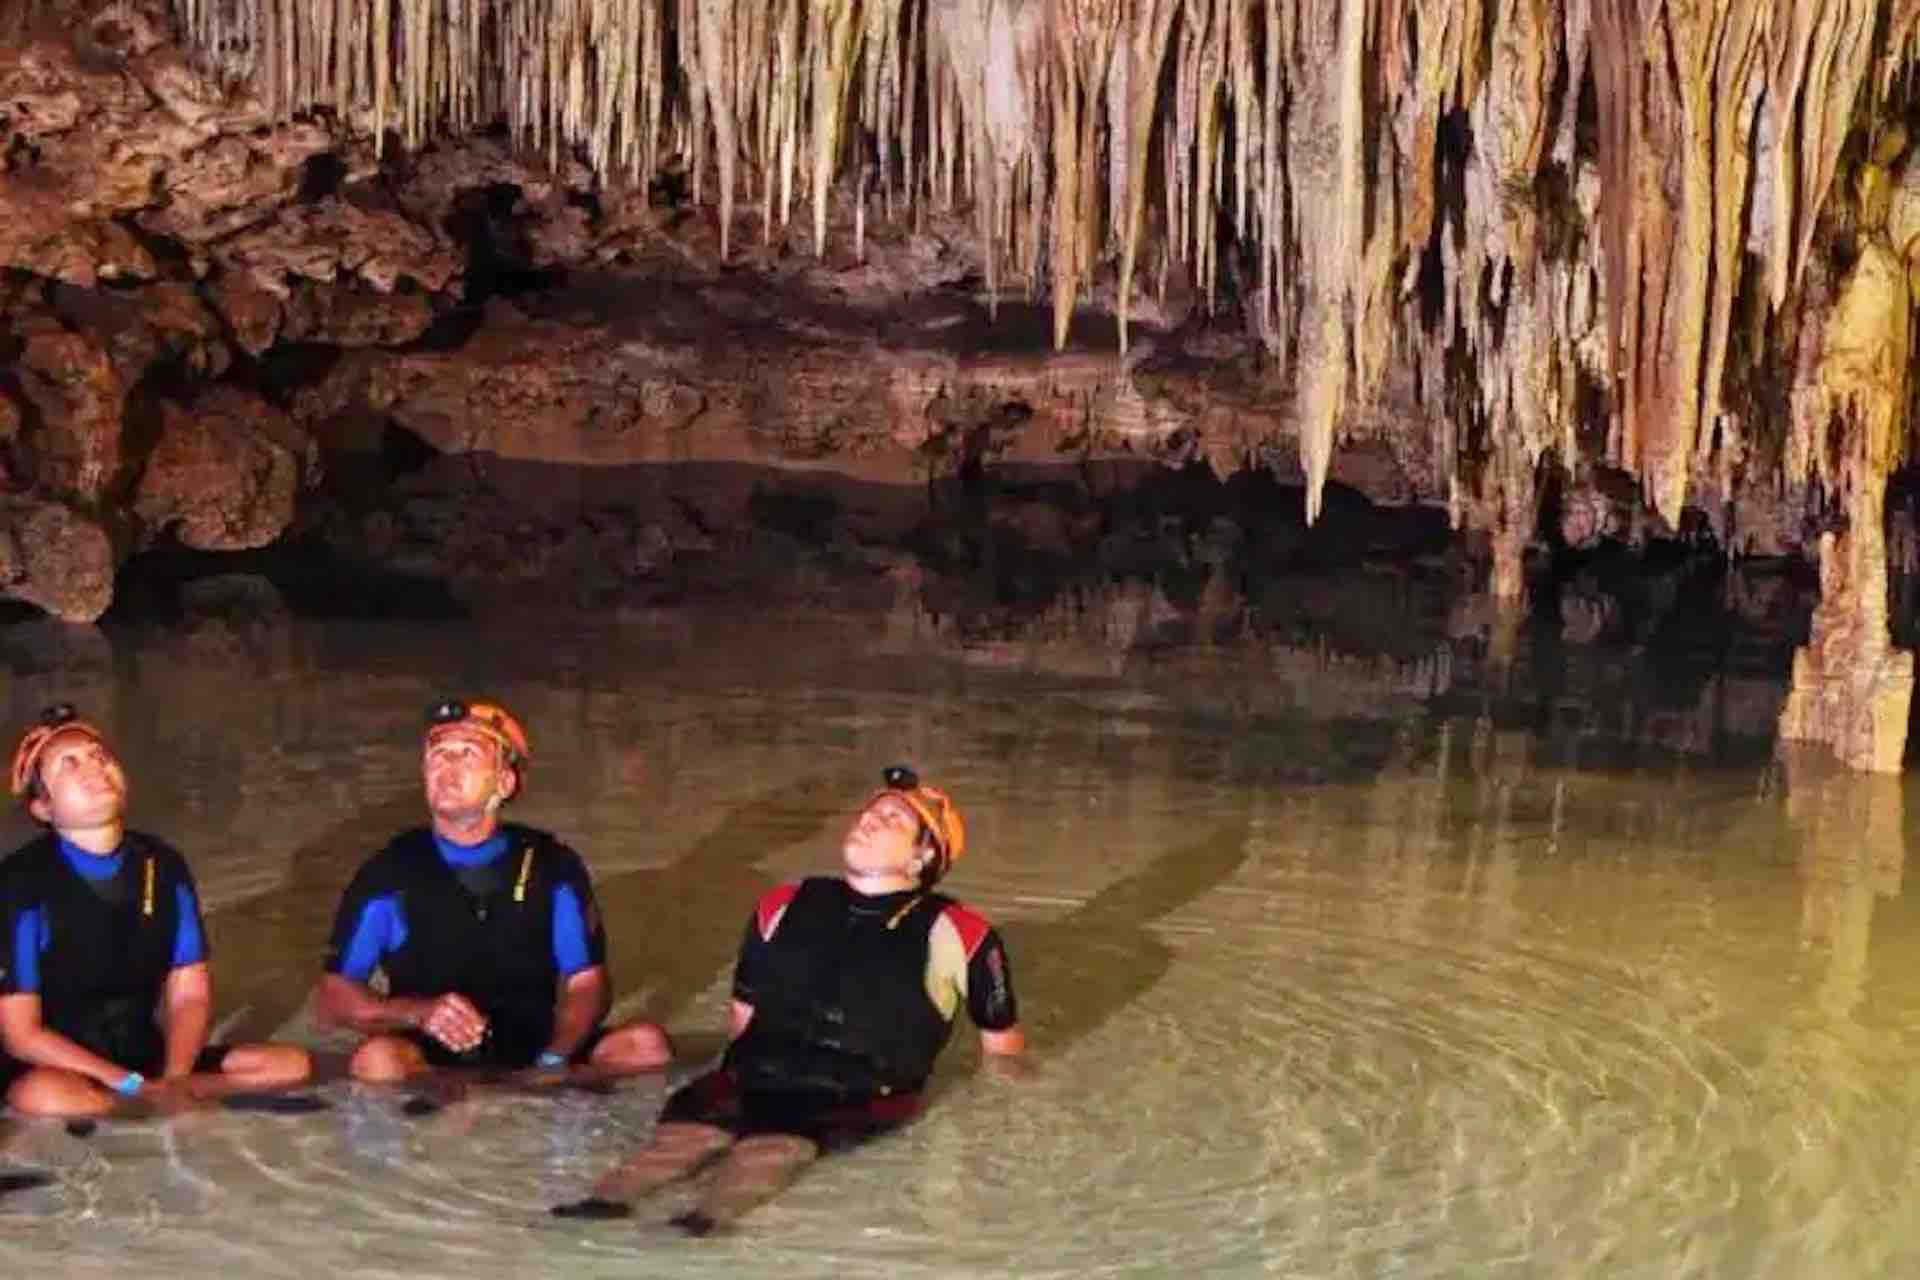 ATV Playa del Carmen Secret Caves tour guests looking up